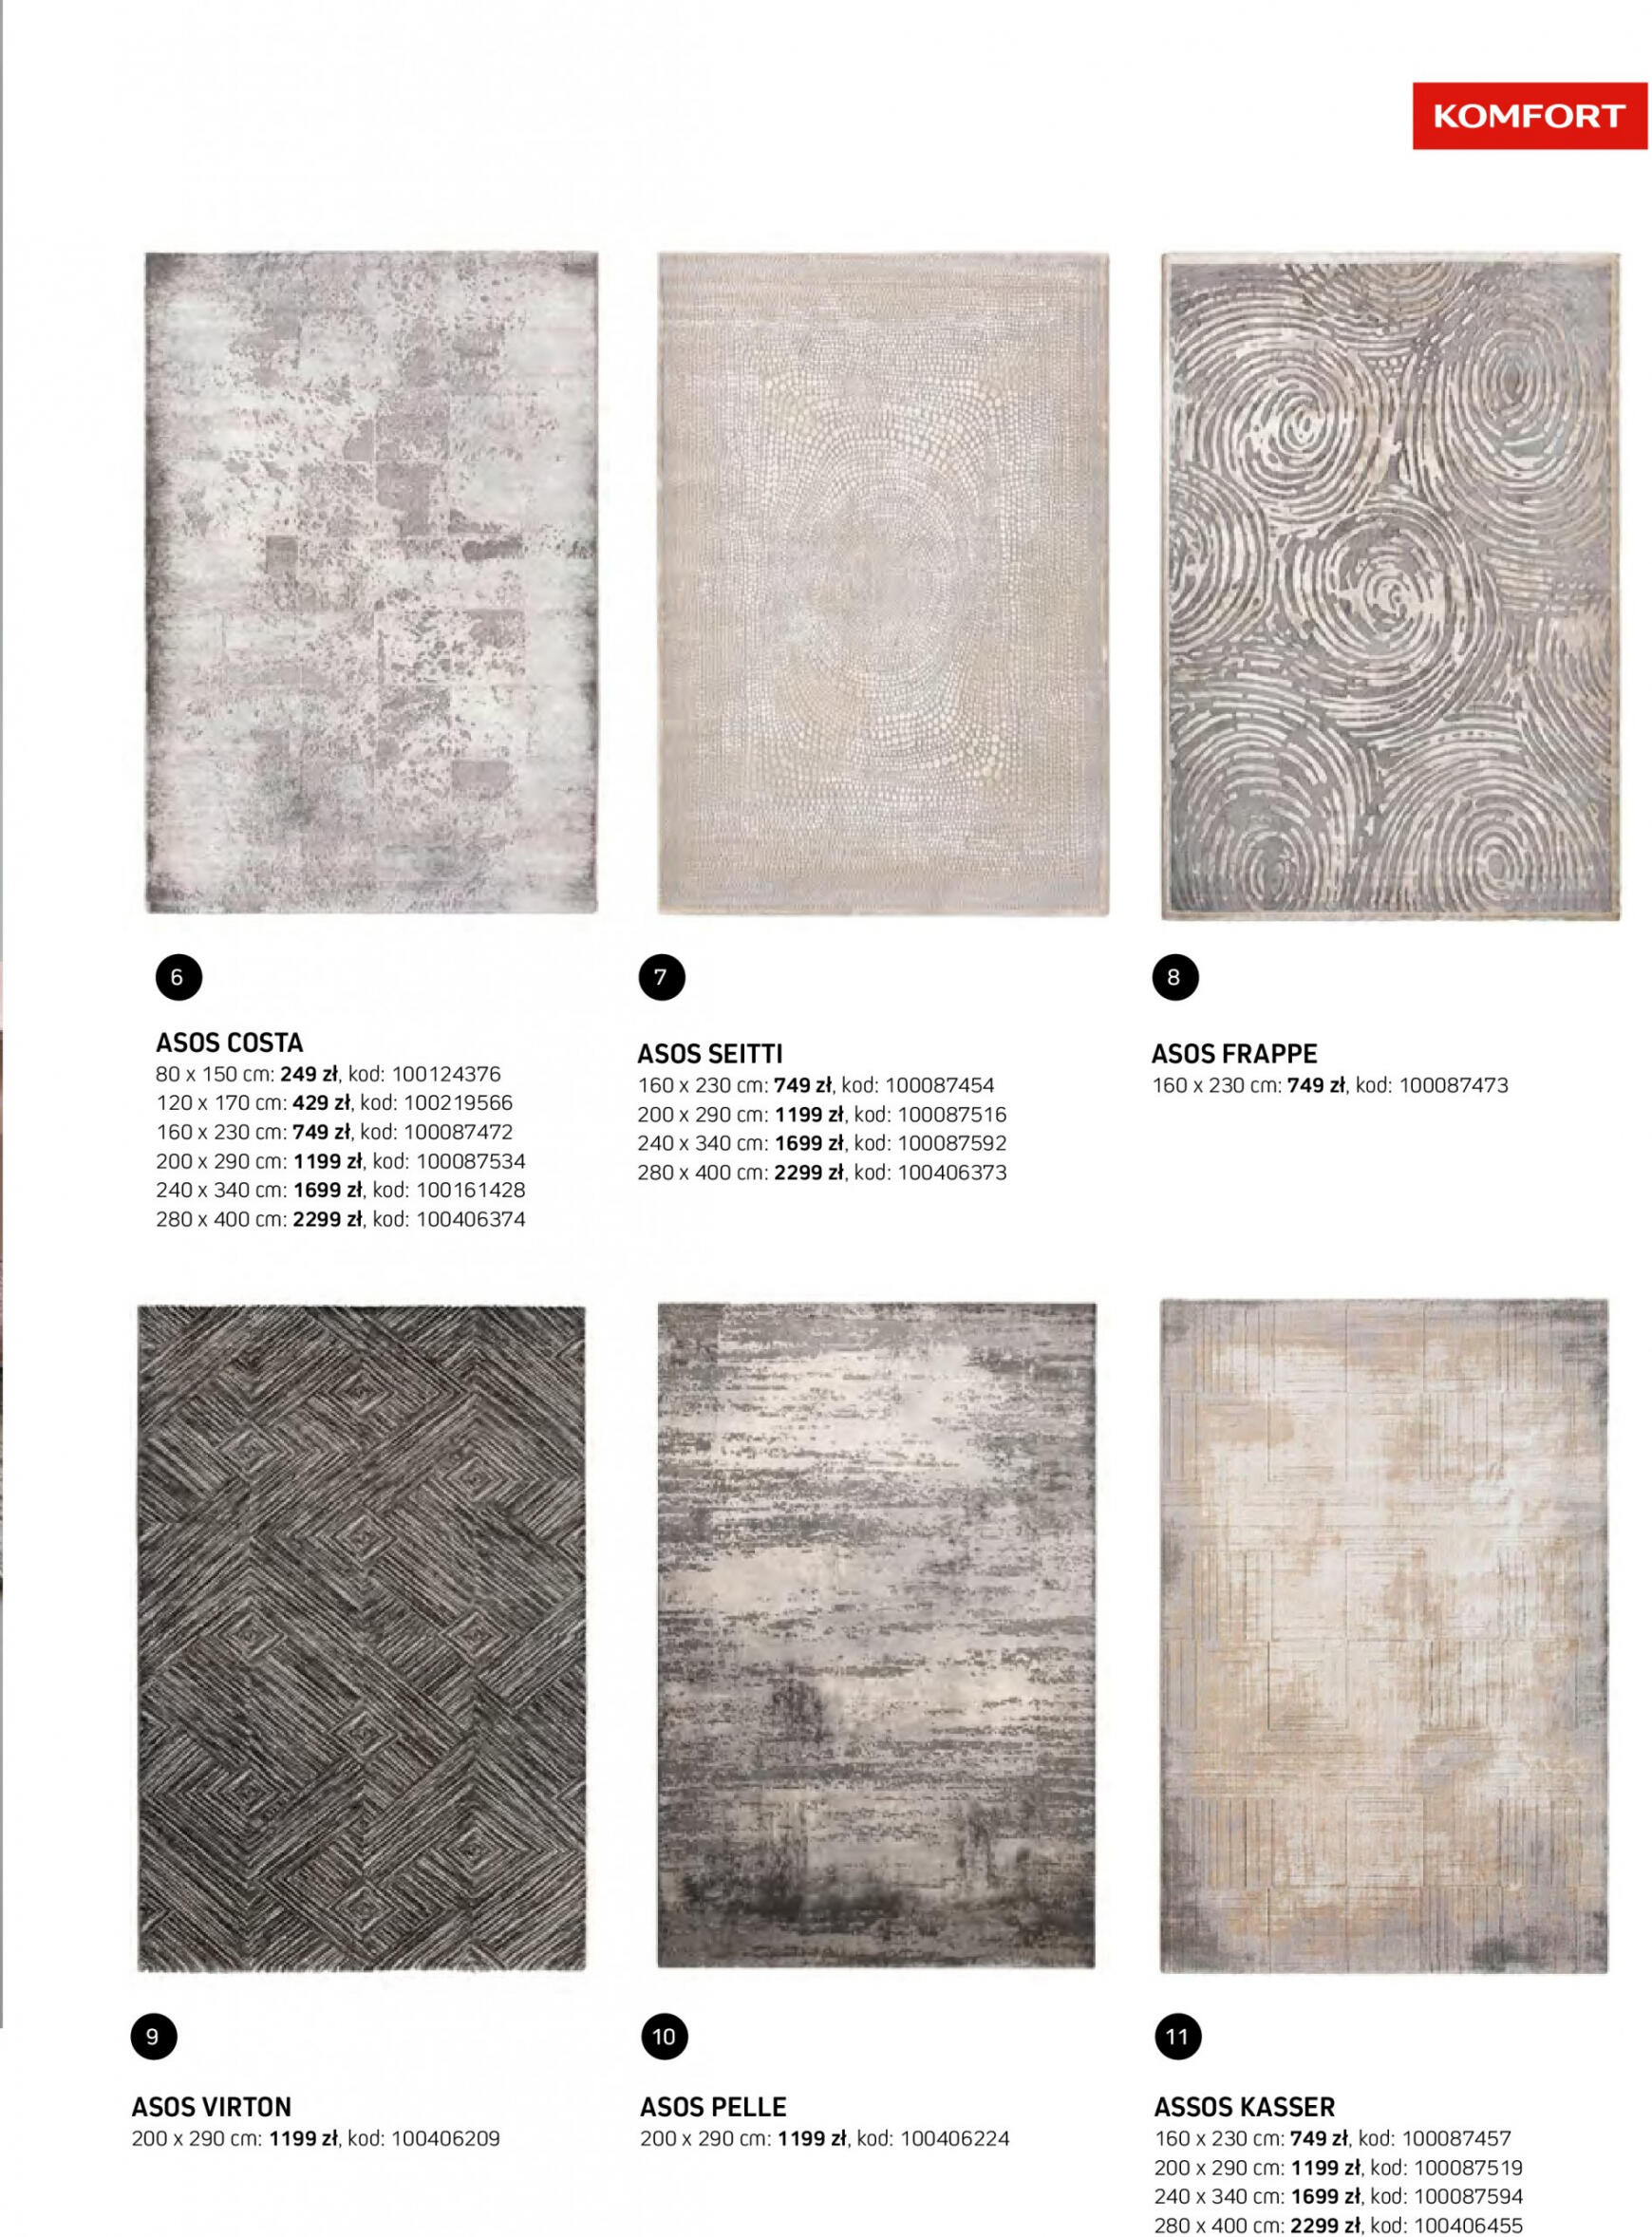 komfort - Komfort - Katalog dywany 2 - page: 15